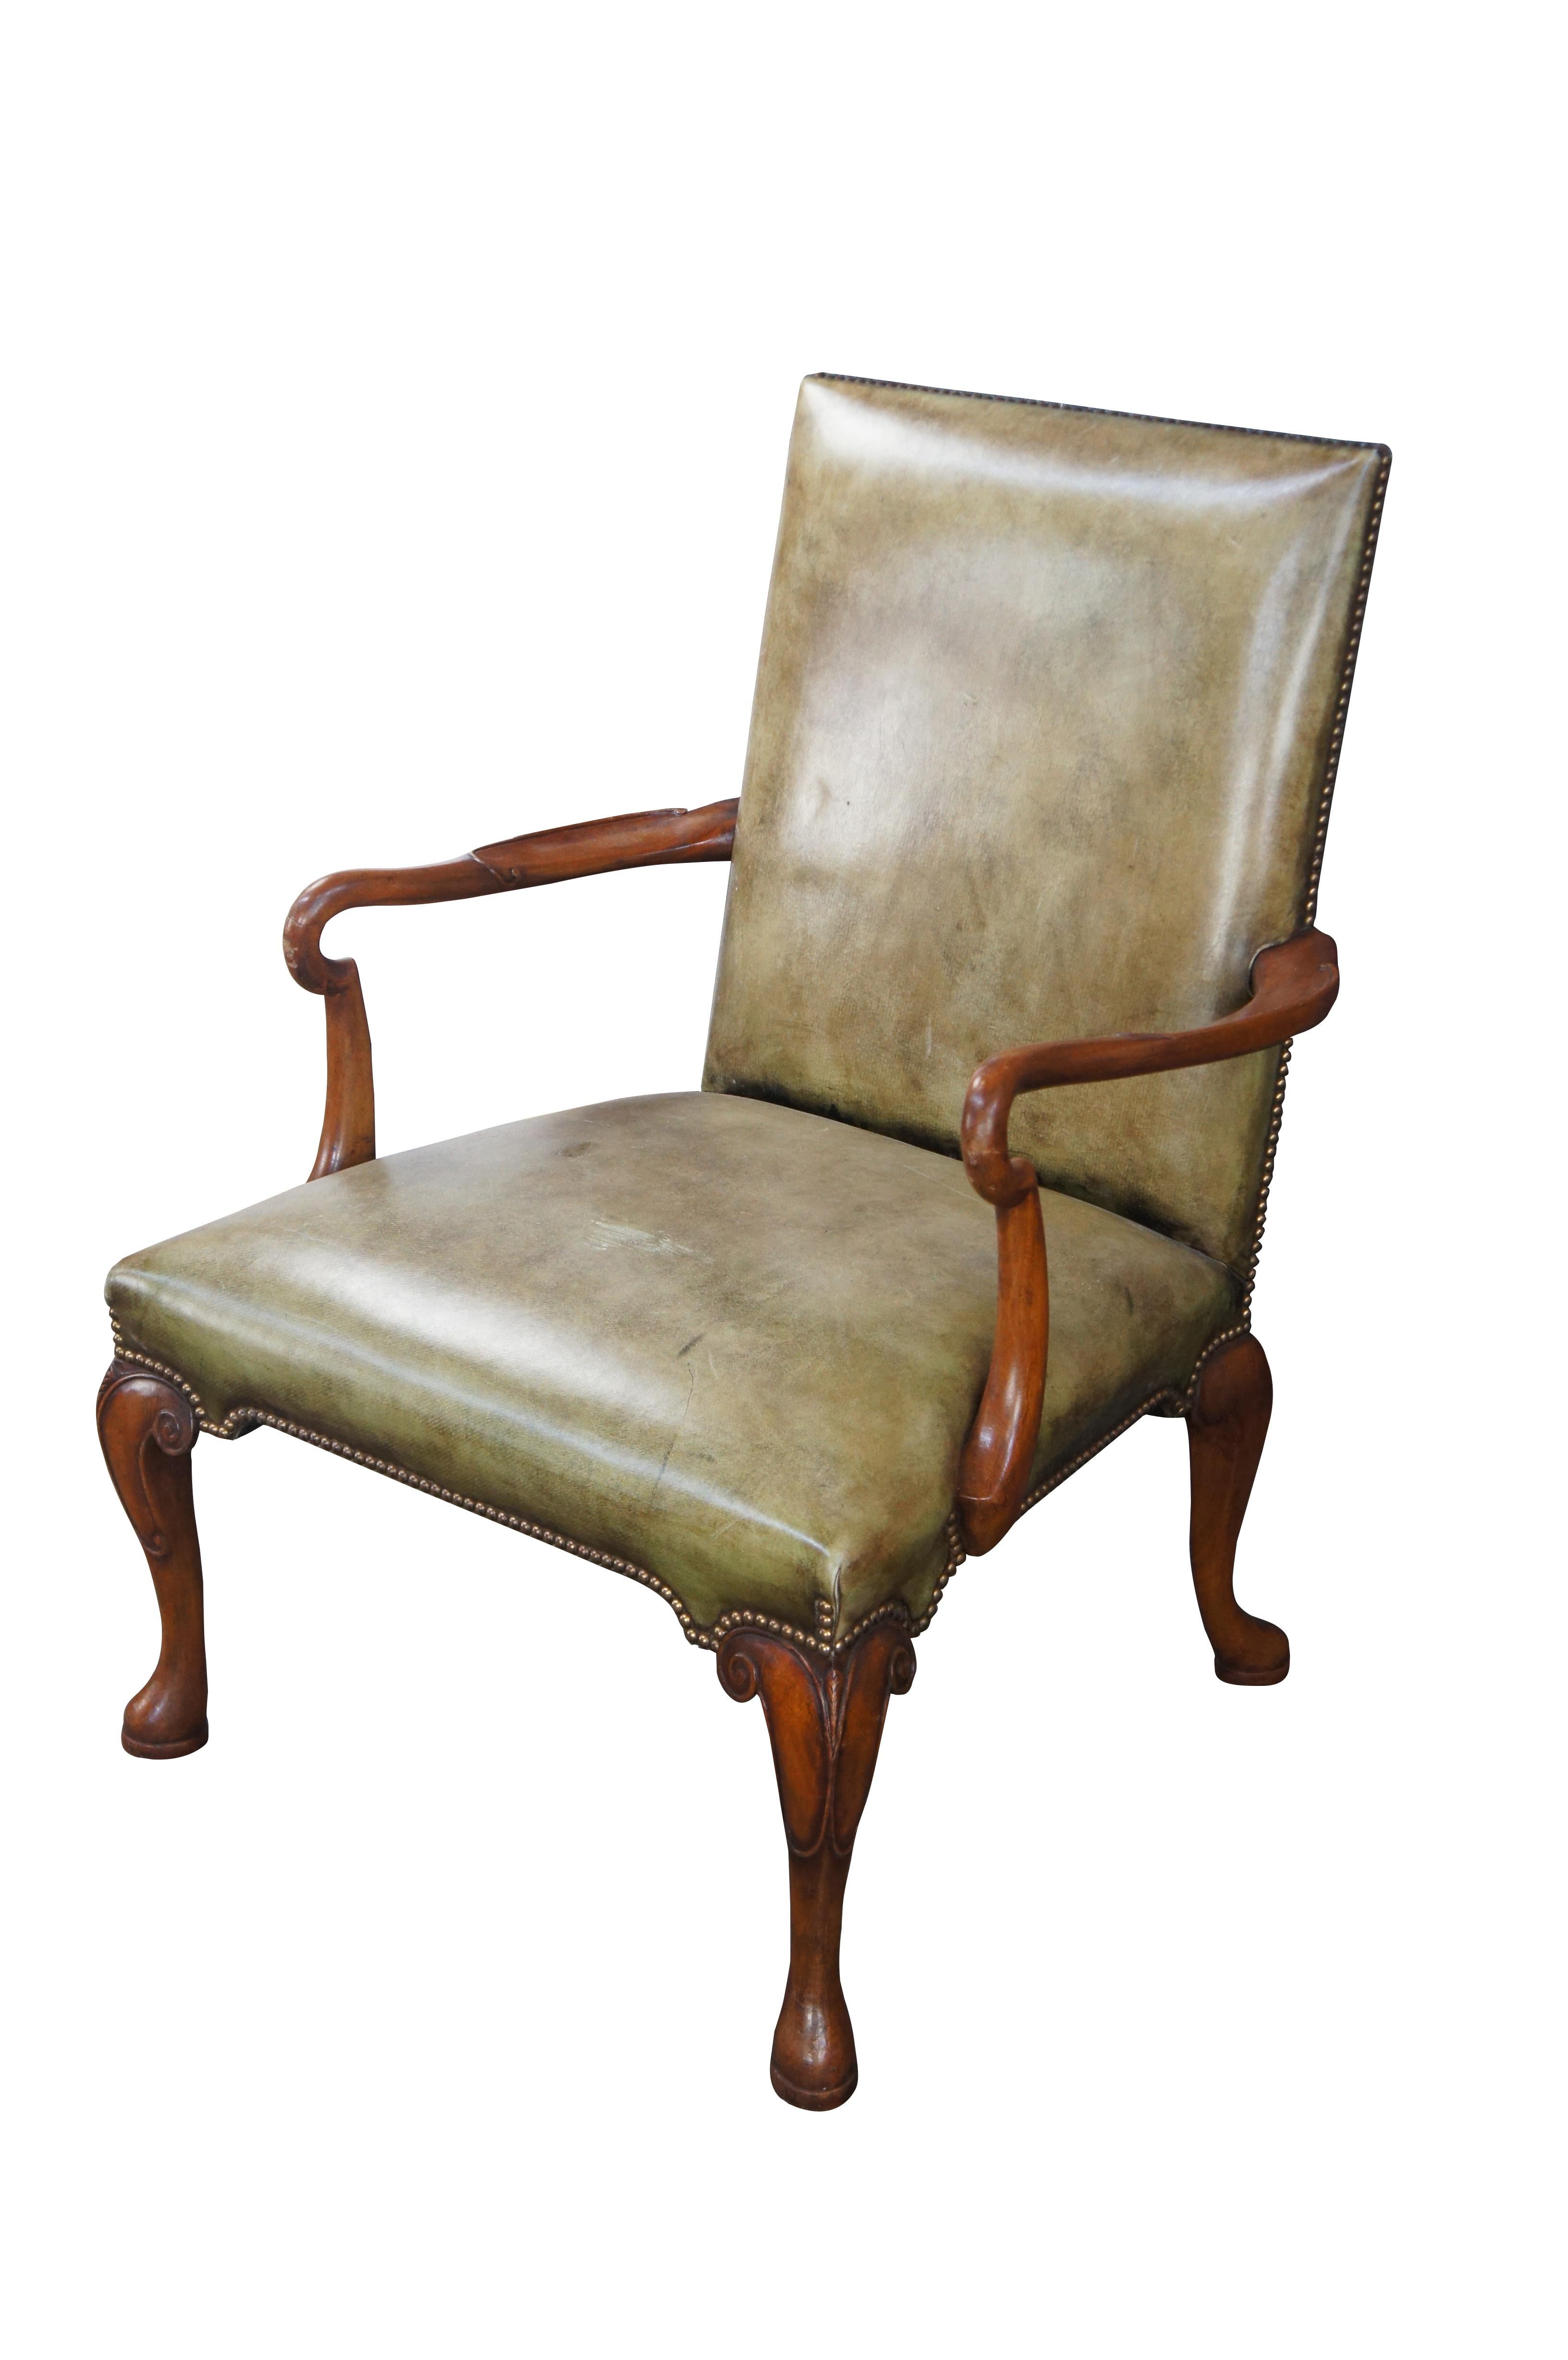 Arthur Brett Englischer Gooseneck-Sessel aus Mahagoni und grünem Leder im georgianischen Stil (Georgian) im Angebot